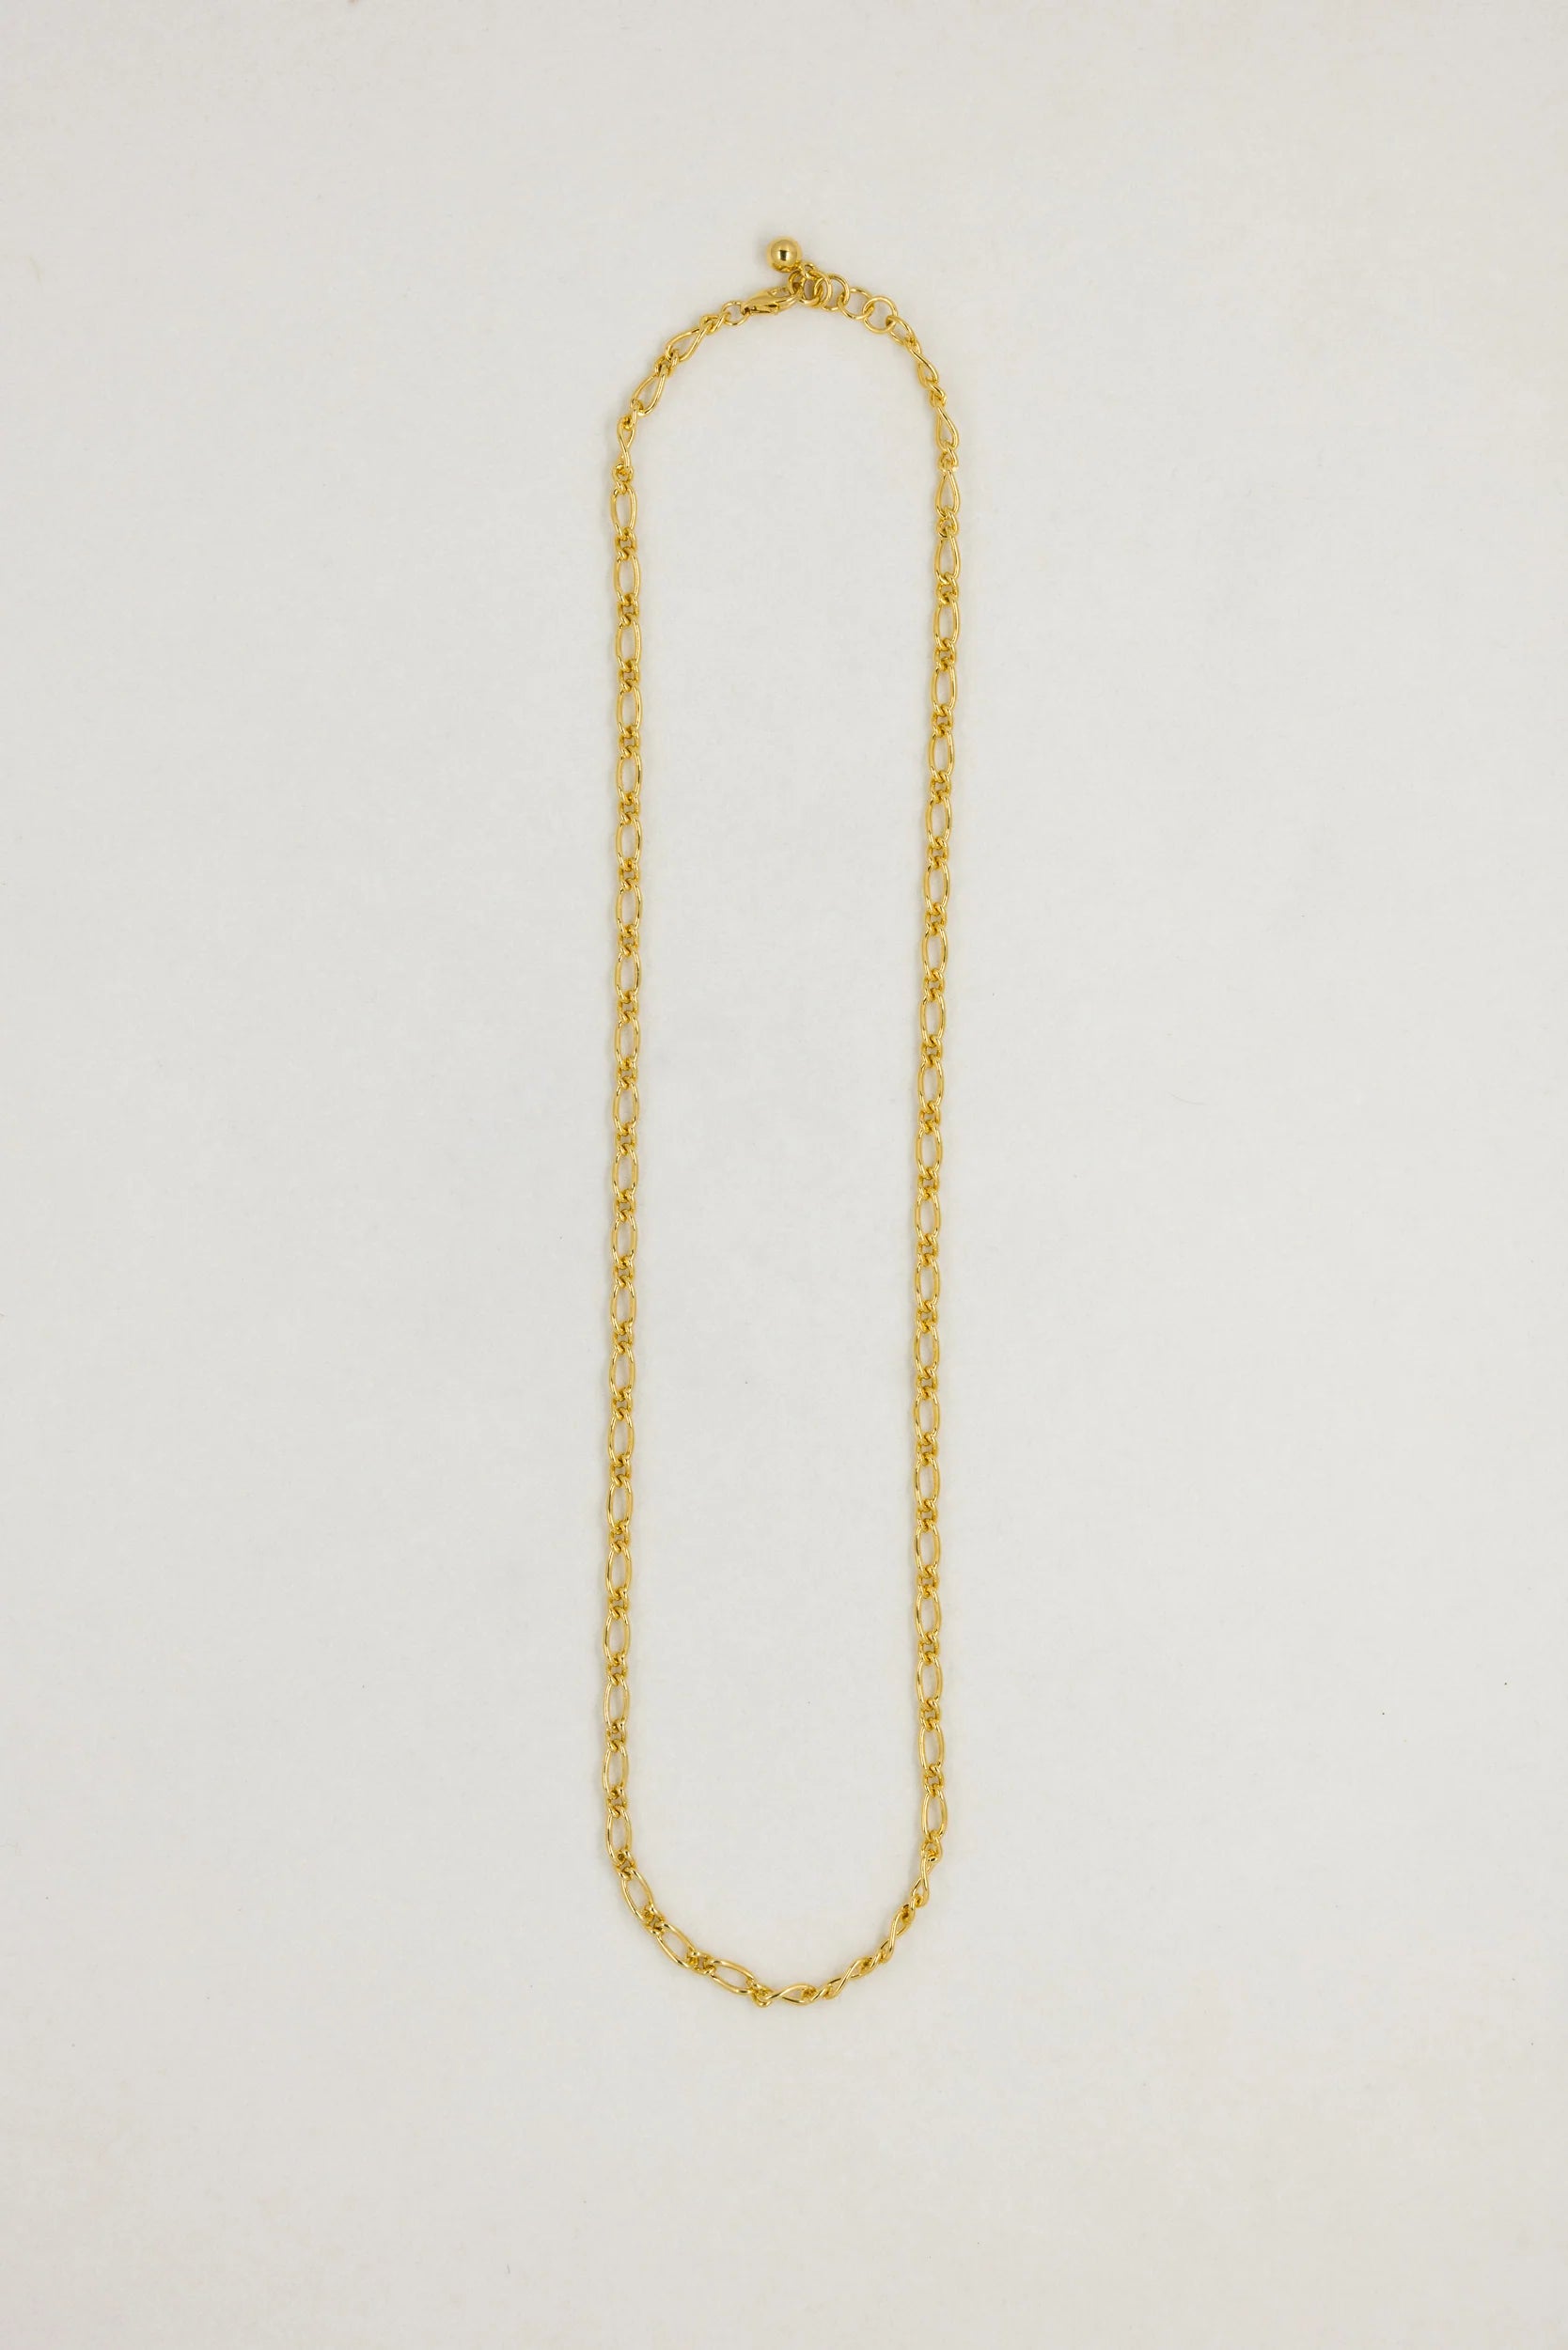 Nina Gordon Jewellery Lynkage Chain Necklace-Jewelry-14k Vermeil-Misch-Boutique-Vancouver-Canada-misch.ca